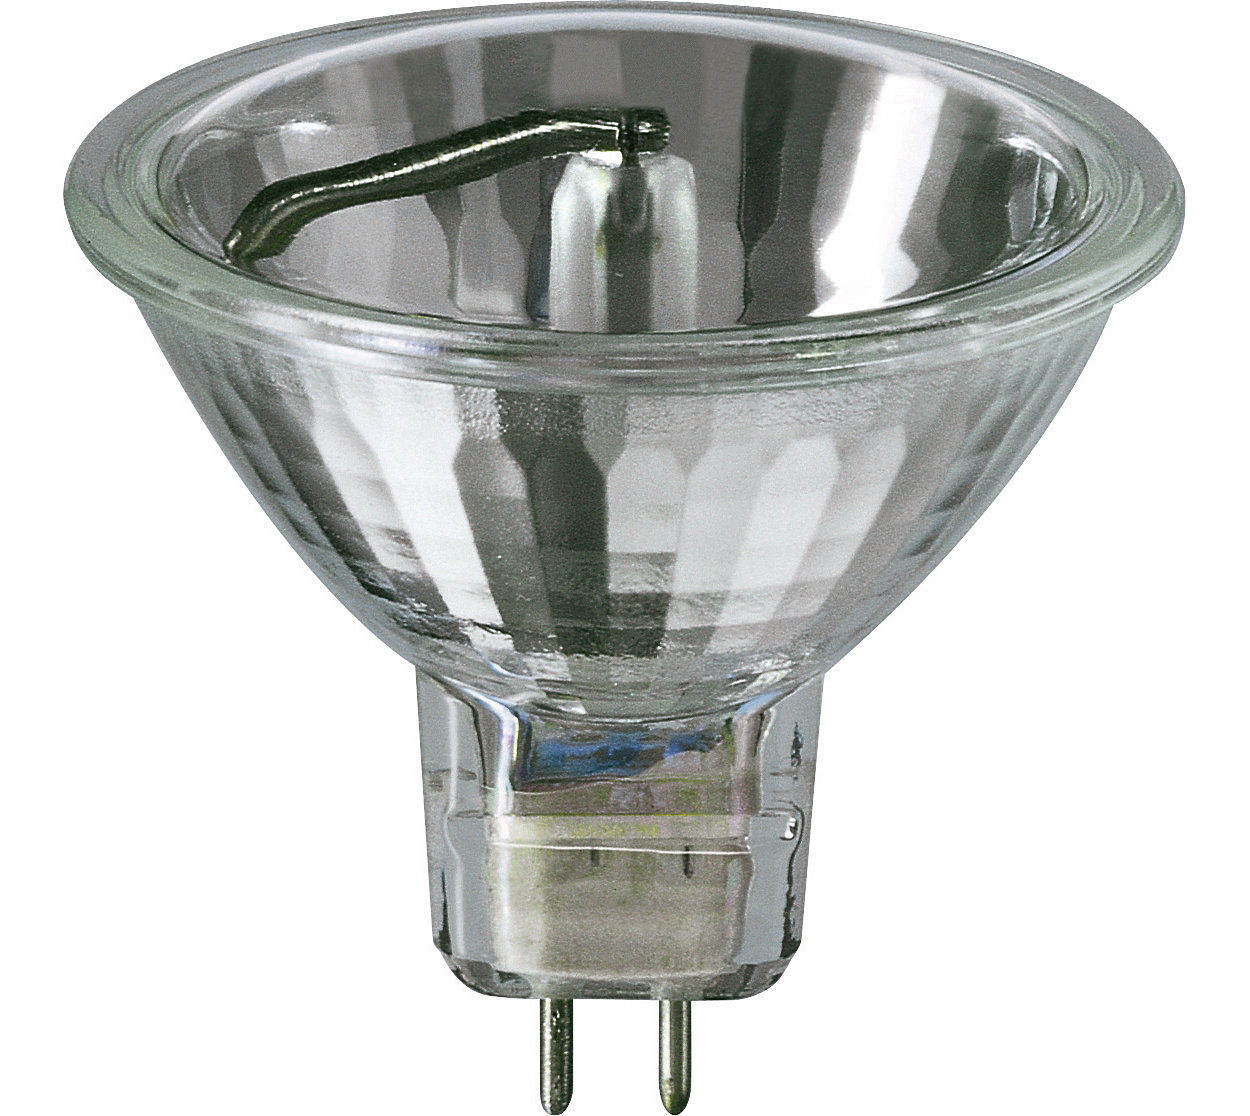 Energy efficient low-voltage halogen reflector lamps